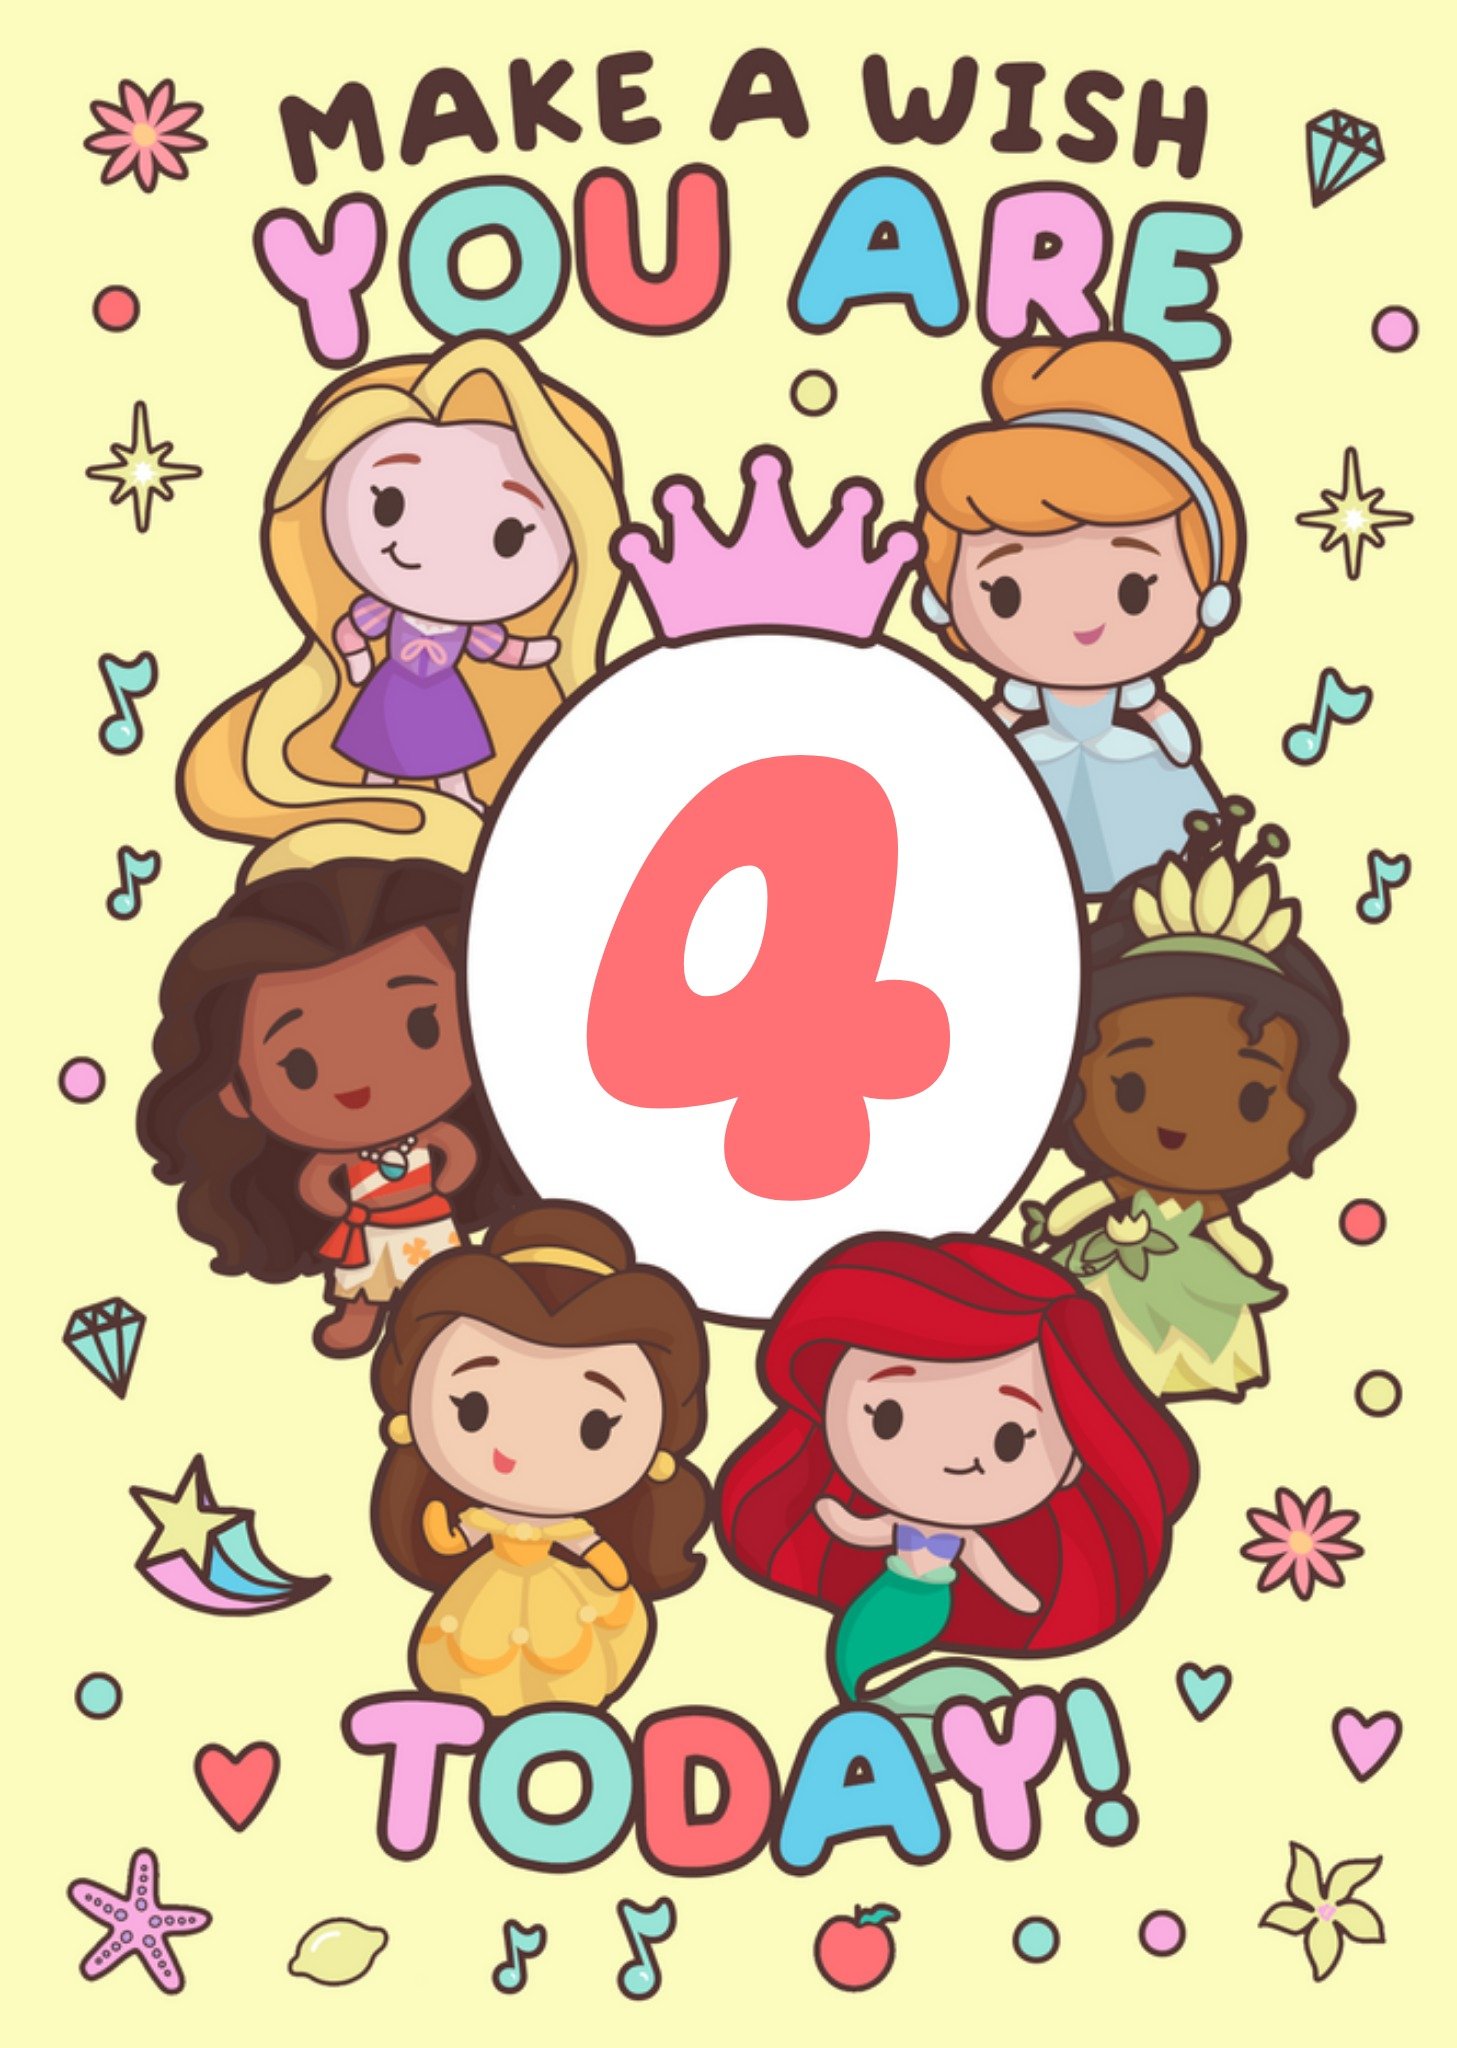 Disney Princess Make A Wish You Are 4 Today Cartoon Princess Illustrations Birthday Card Ecard